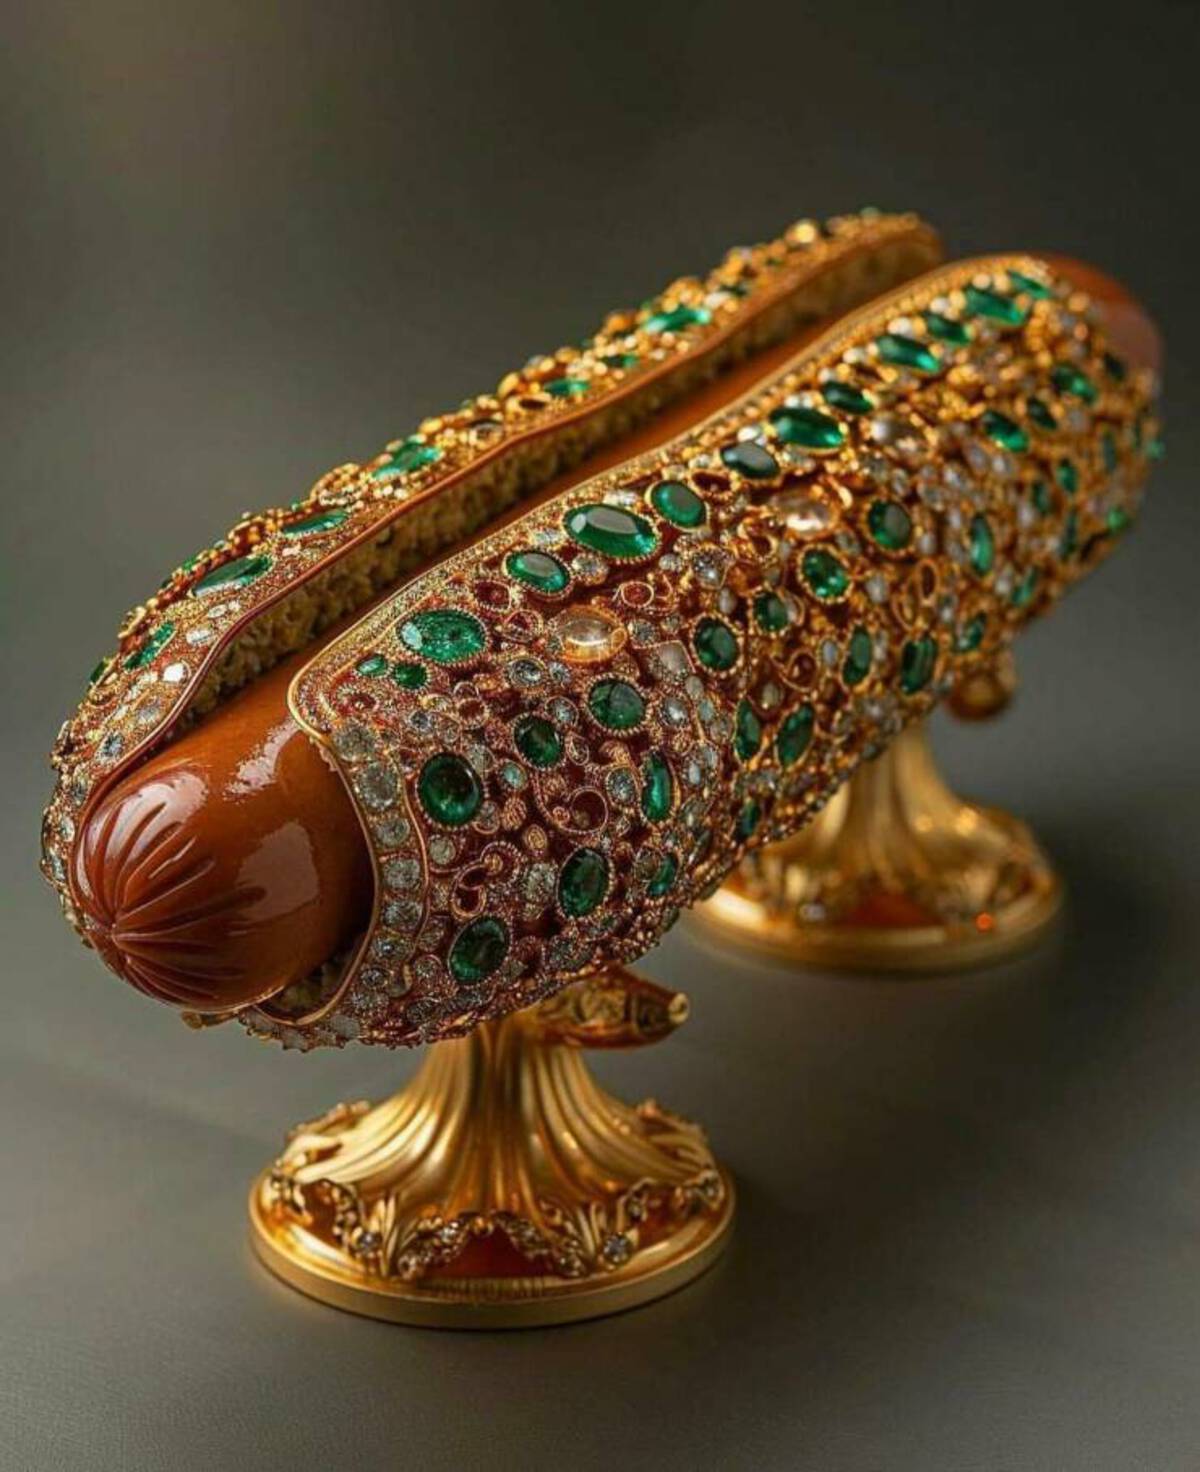 bejeweled hotdog